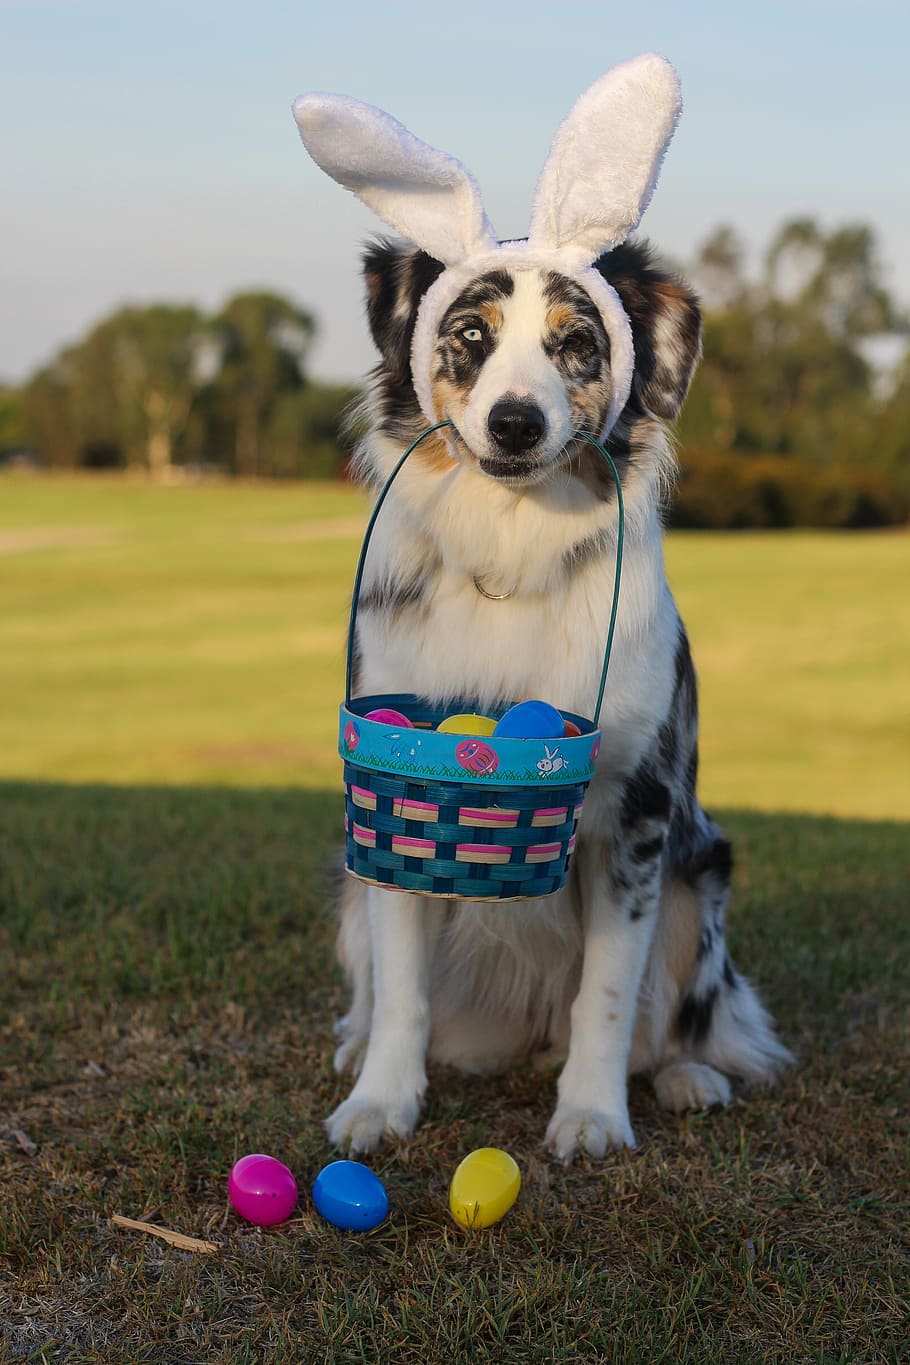 HD wallpaper: white, brown, and black dog carrying Easter basket, australian shepherd